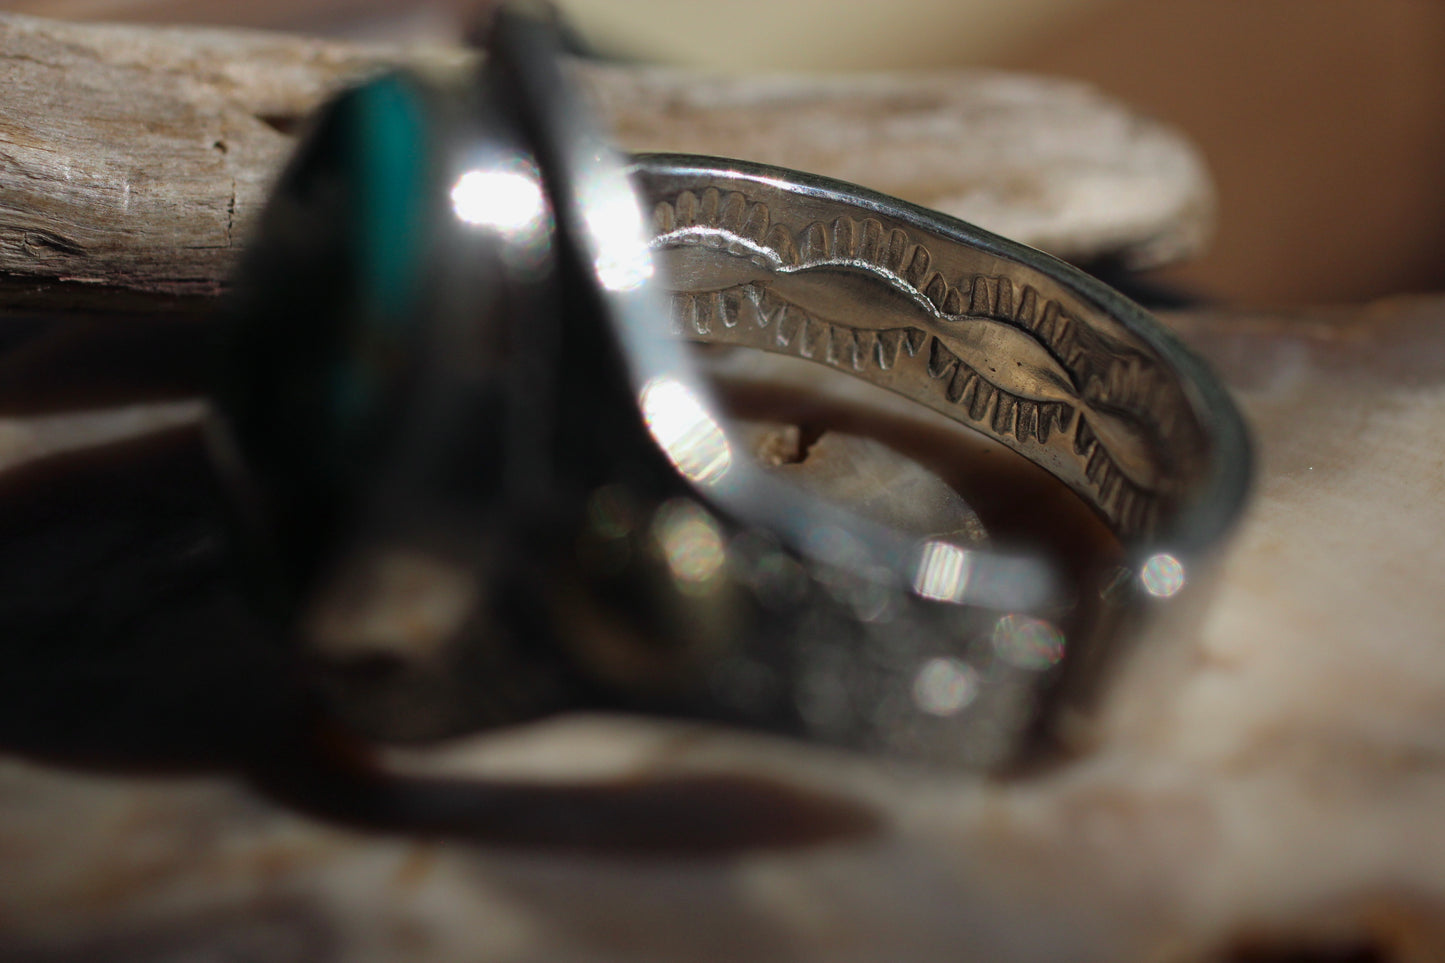 Royston Turquoise Signet Ring